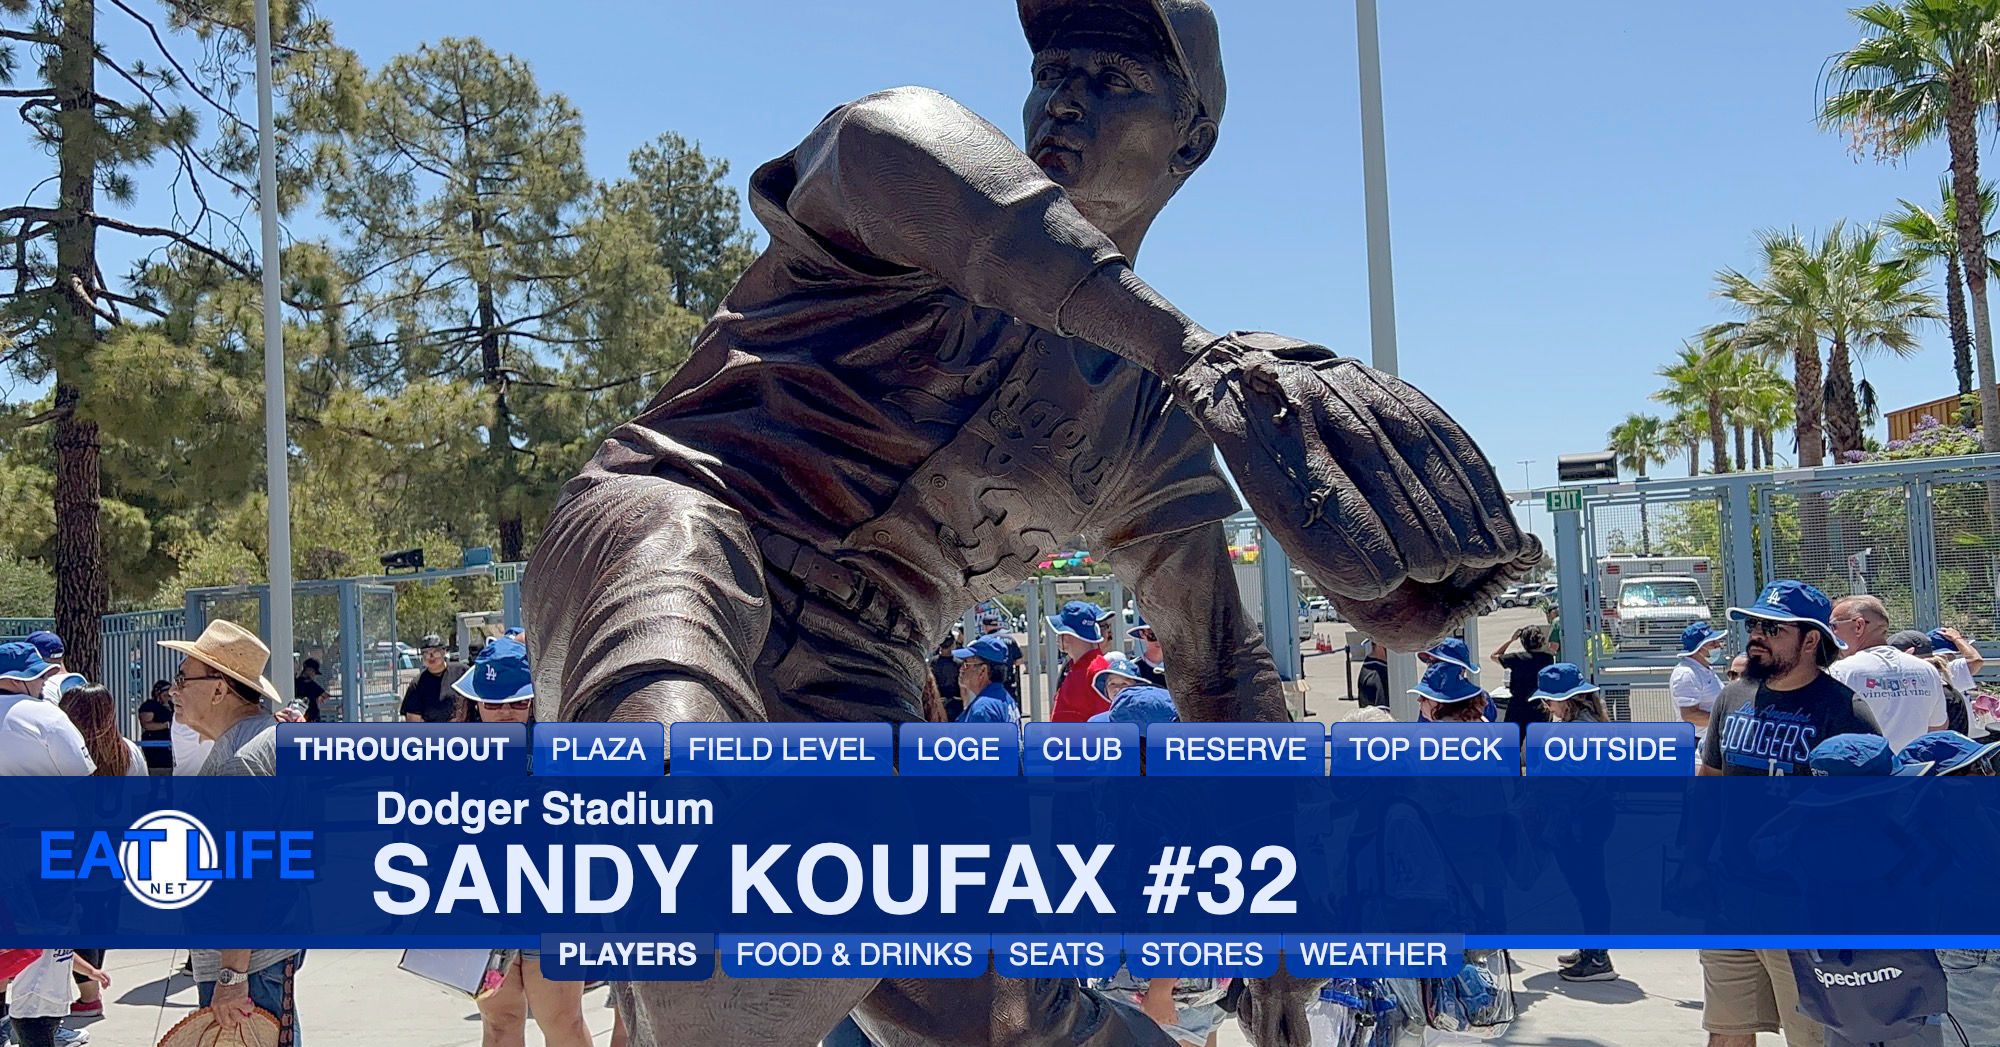 Sandy Koufax #32